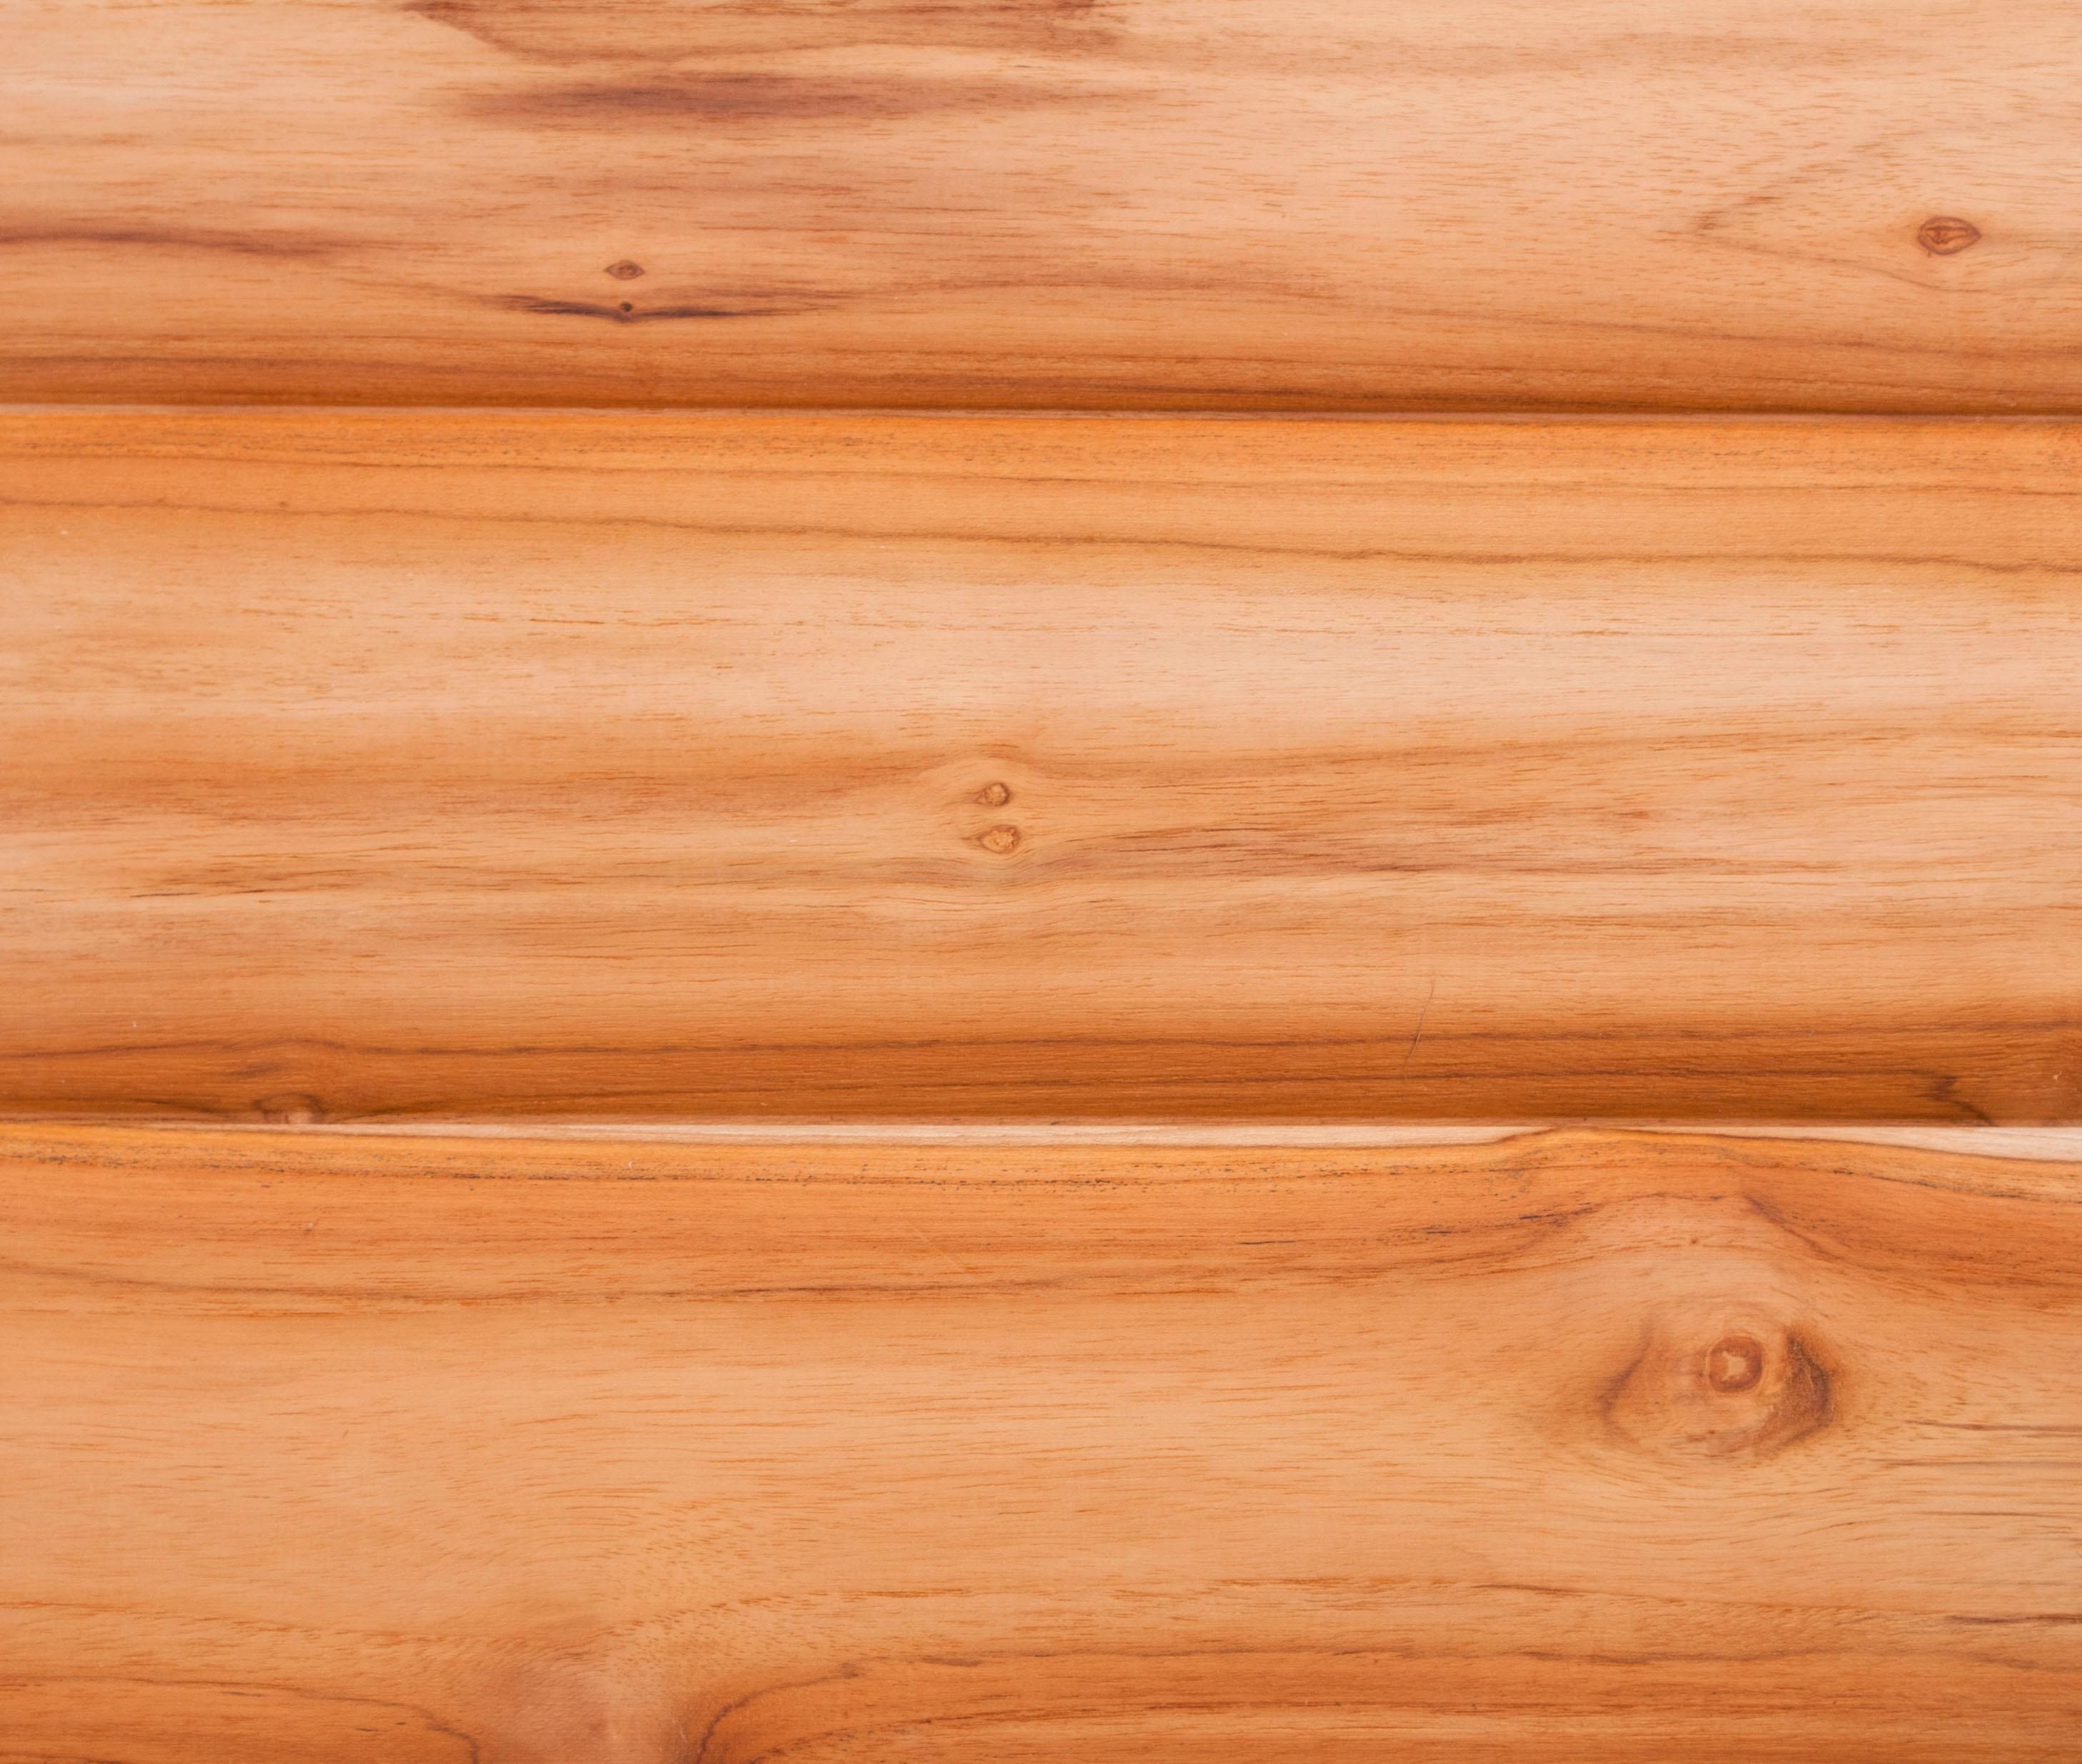 salvaged hardwood flooring for sale of mold on lumber regarding reclaimed cedar shingles on cupboard roof with polka dot effect using brass